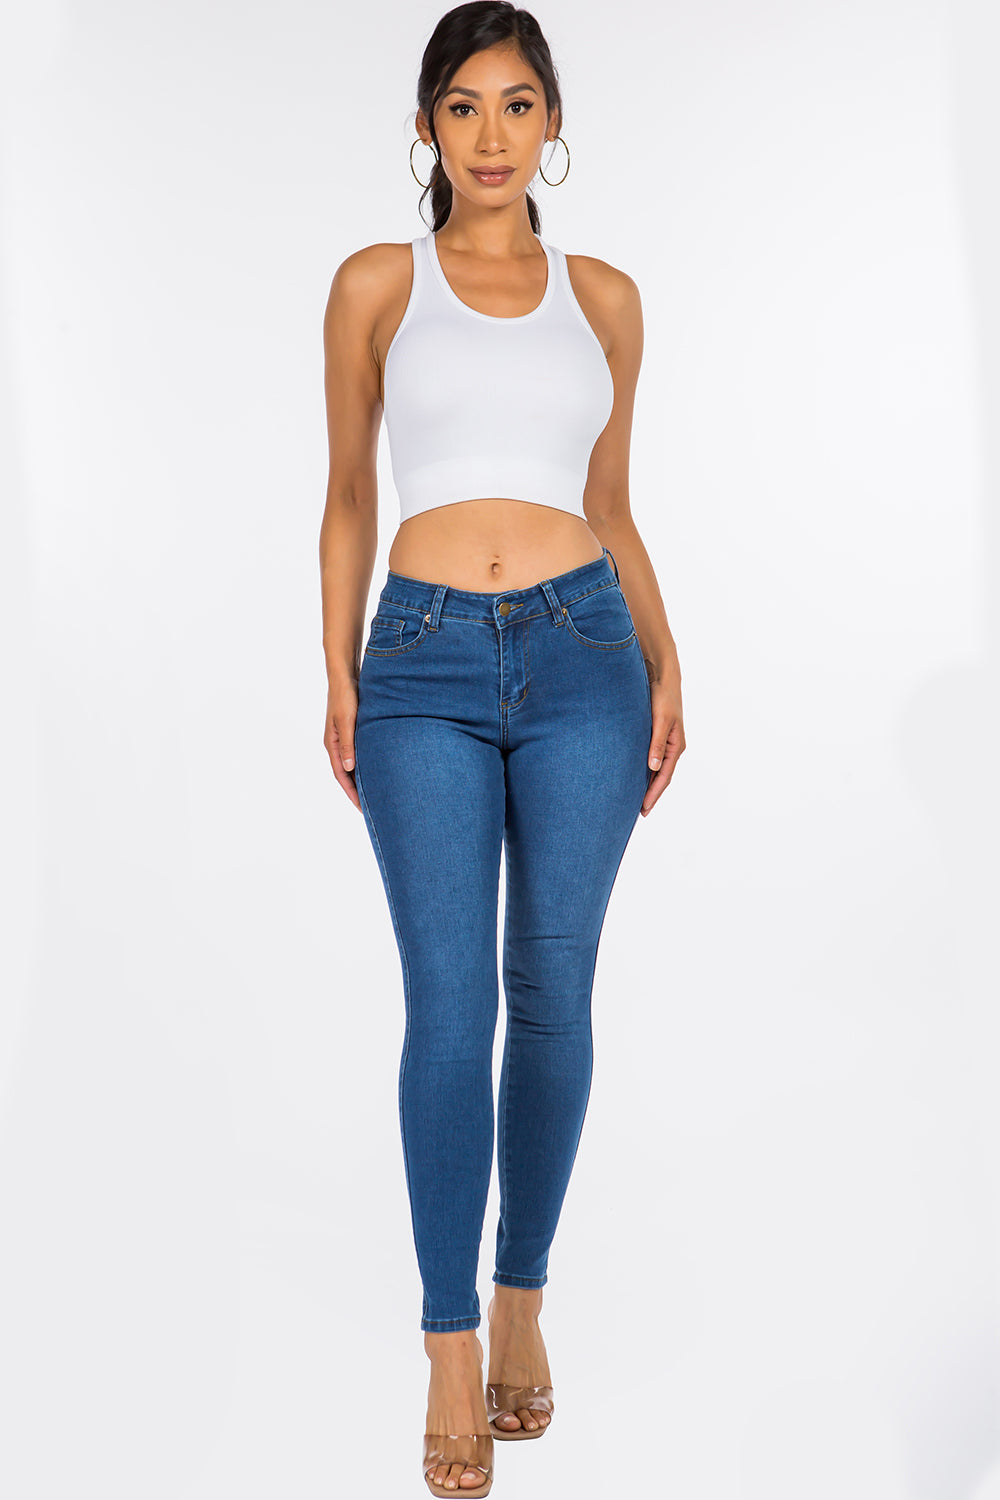 Abfertigung Wholesale Classic TURTLE BLUE WR3702 Jeans @ Rise – Mid Turtle Blue Skinny Jeans